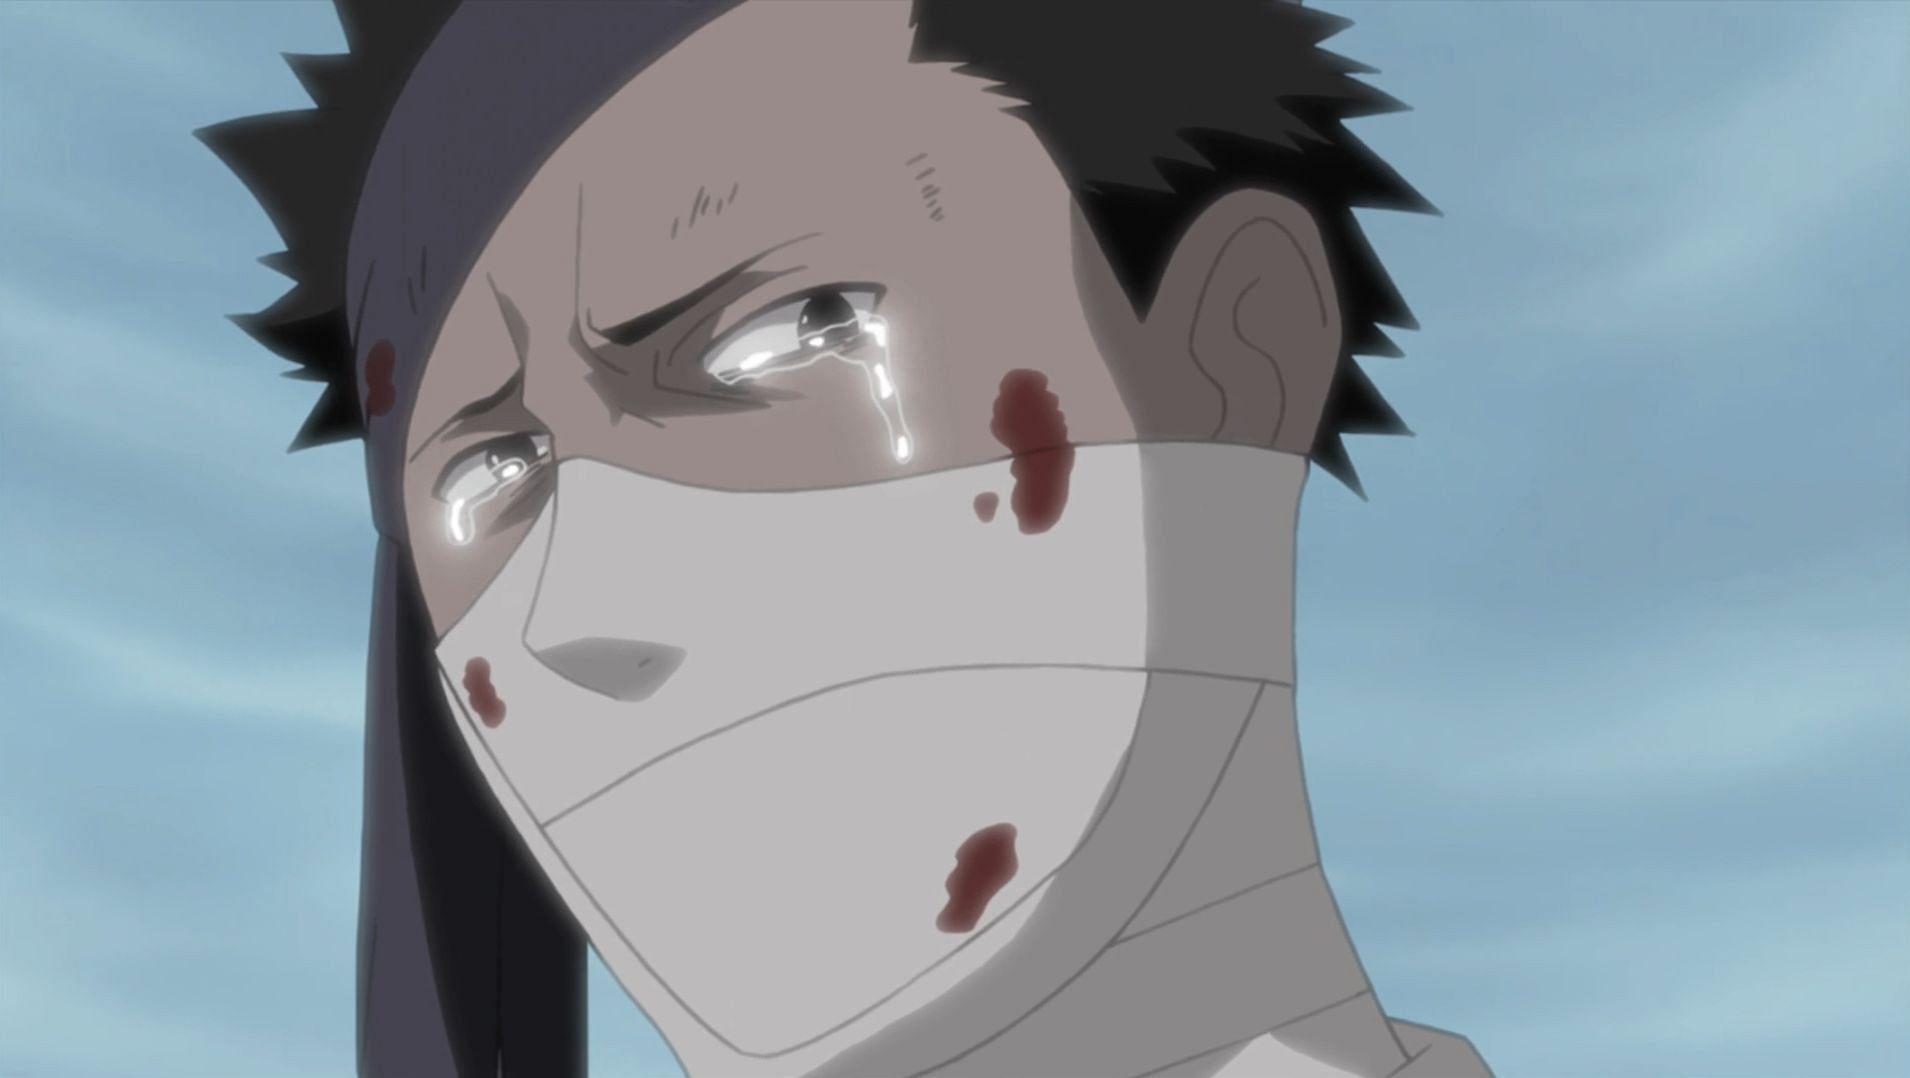 Zabuza Momochi, as seen in the anime Naruto (Image via Studio Pierrot)